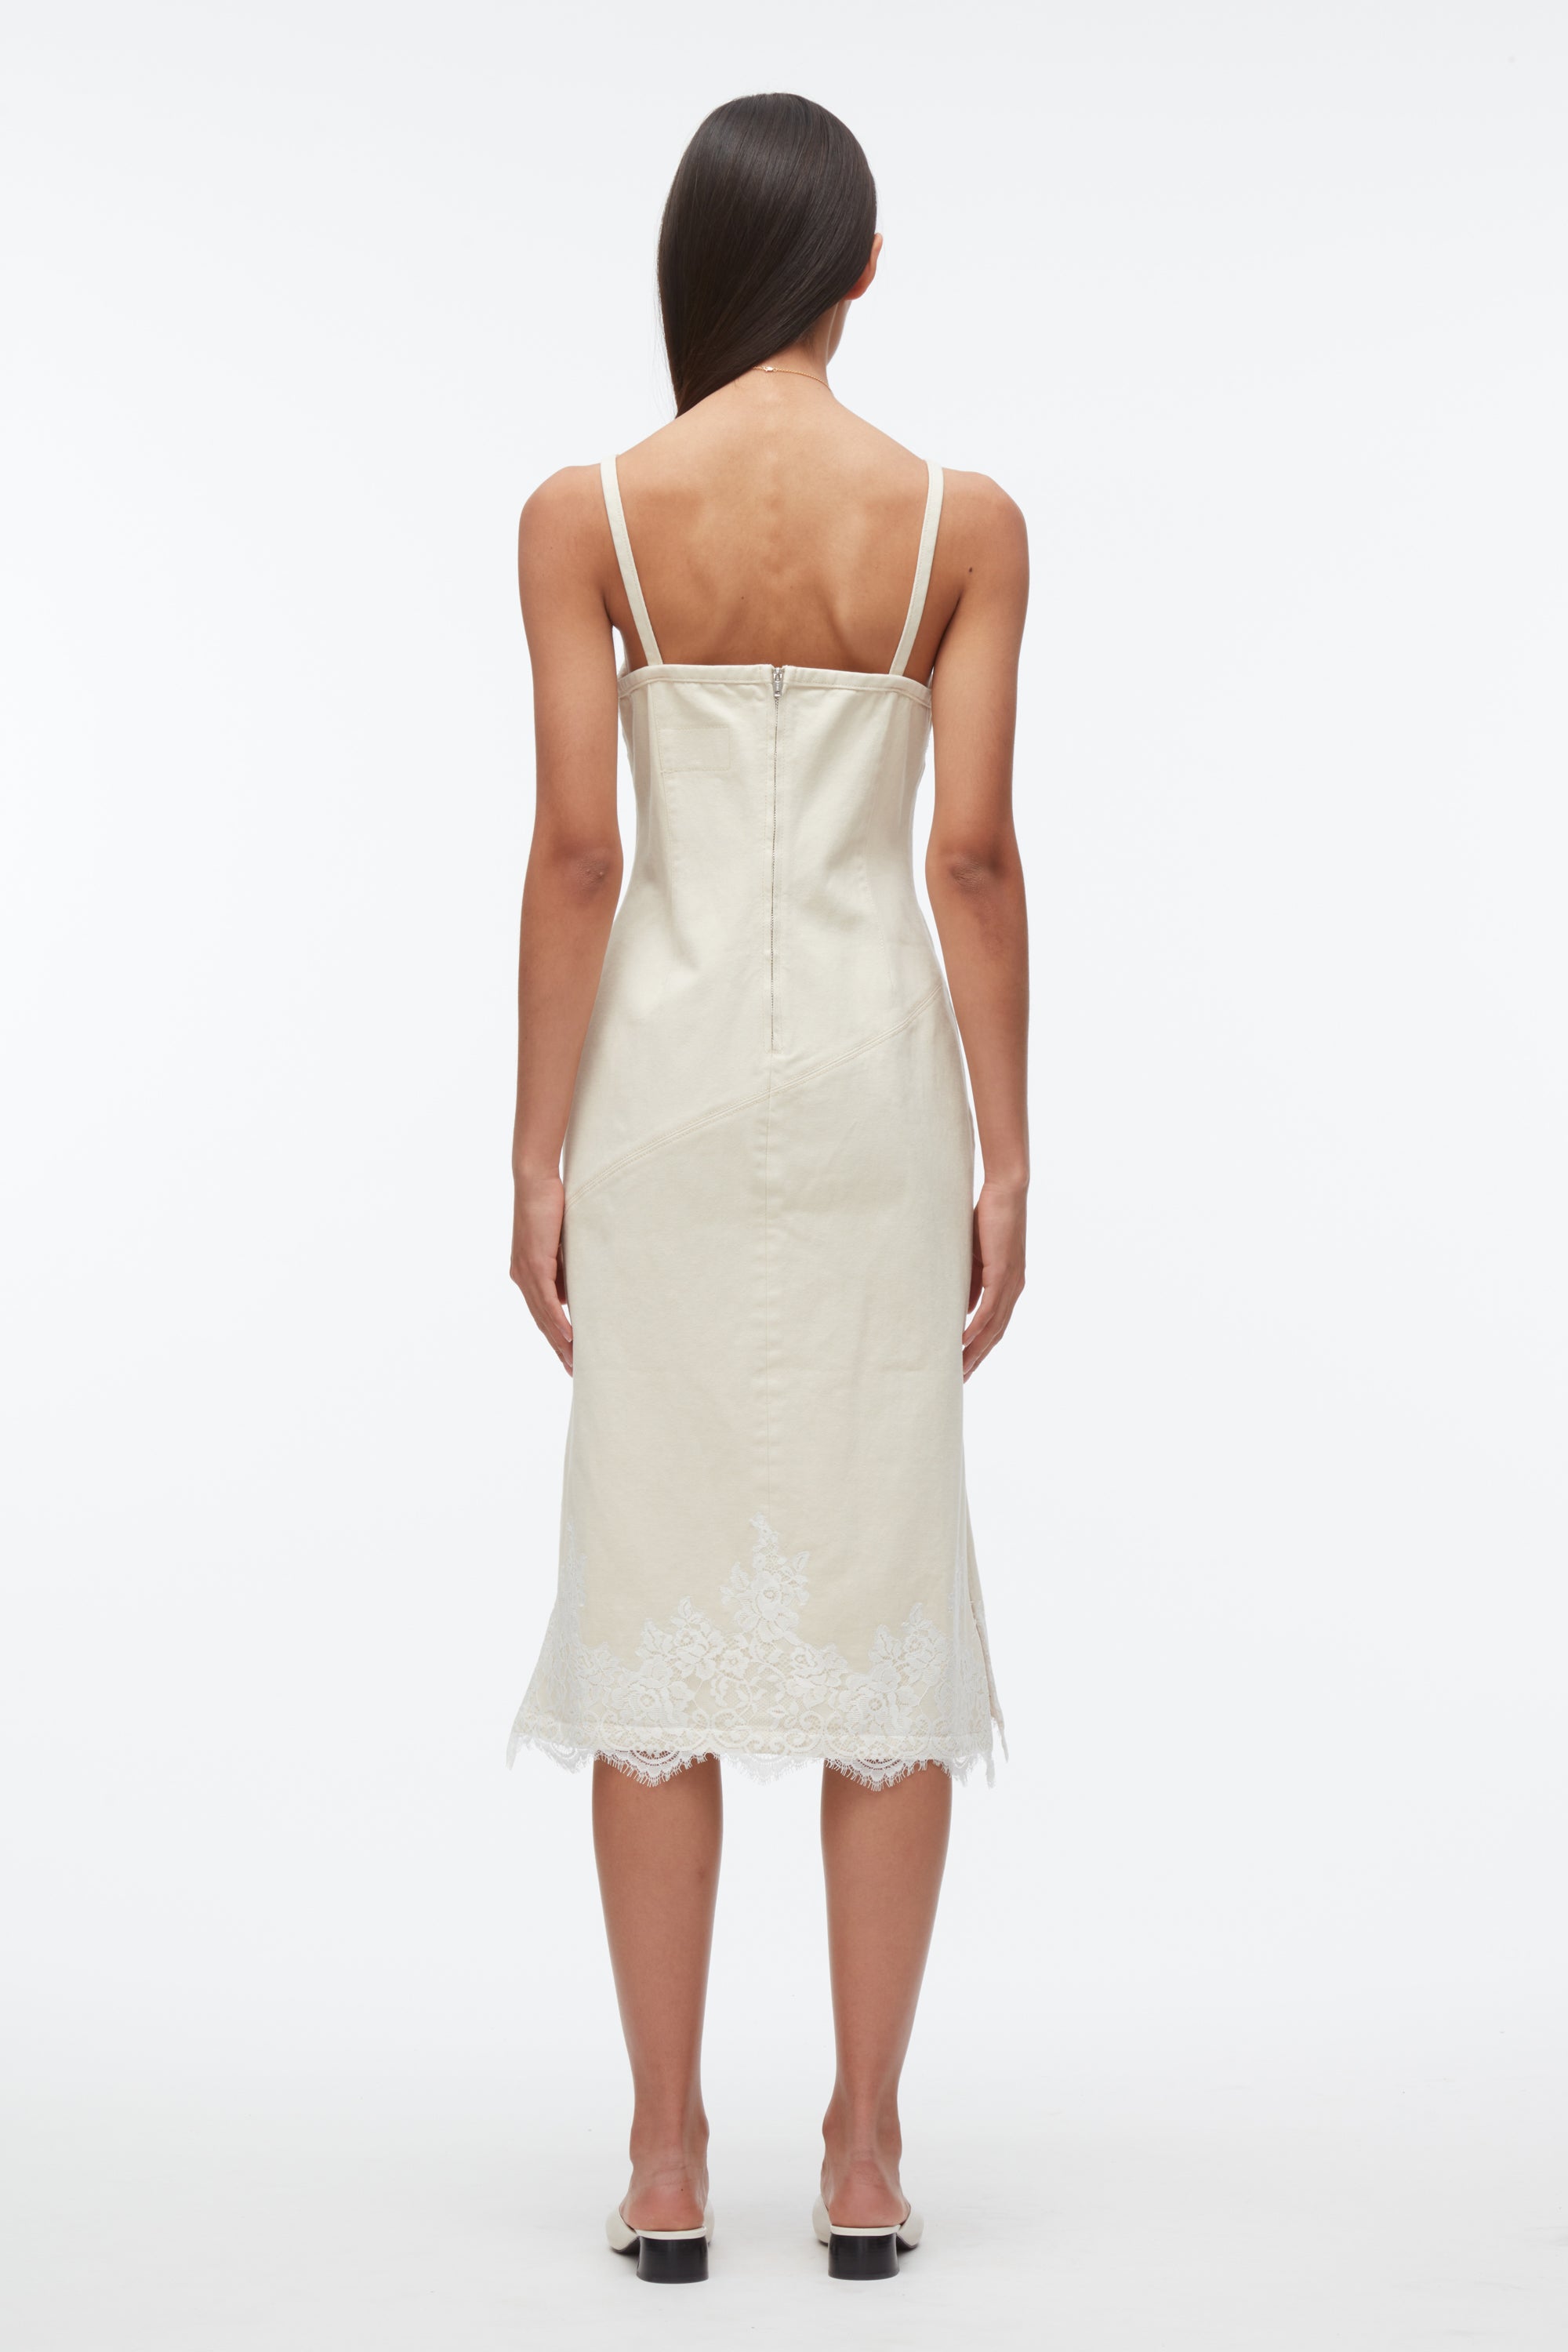 Denim Slip Dress With Lace – 3.1 Phillip Lim